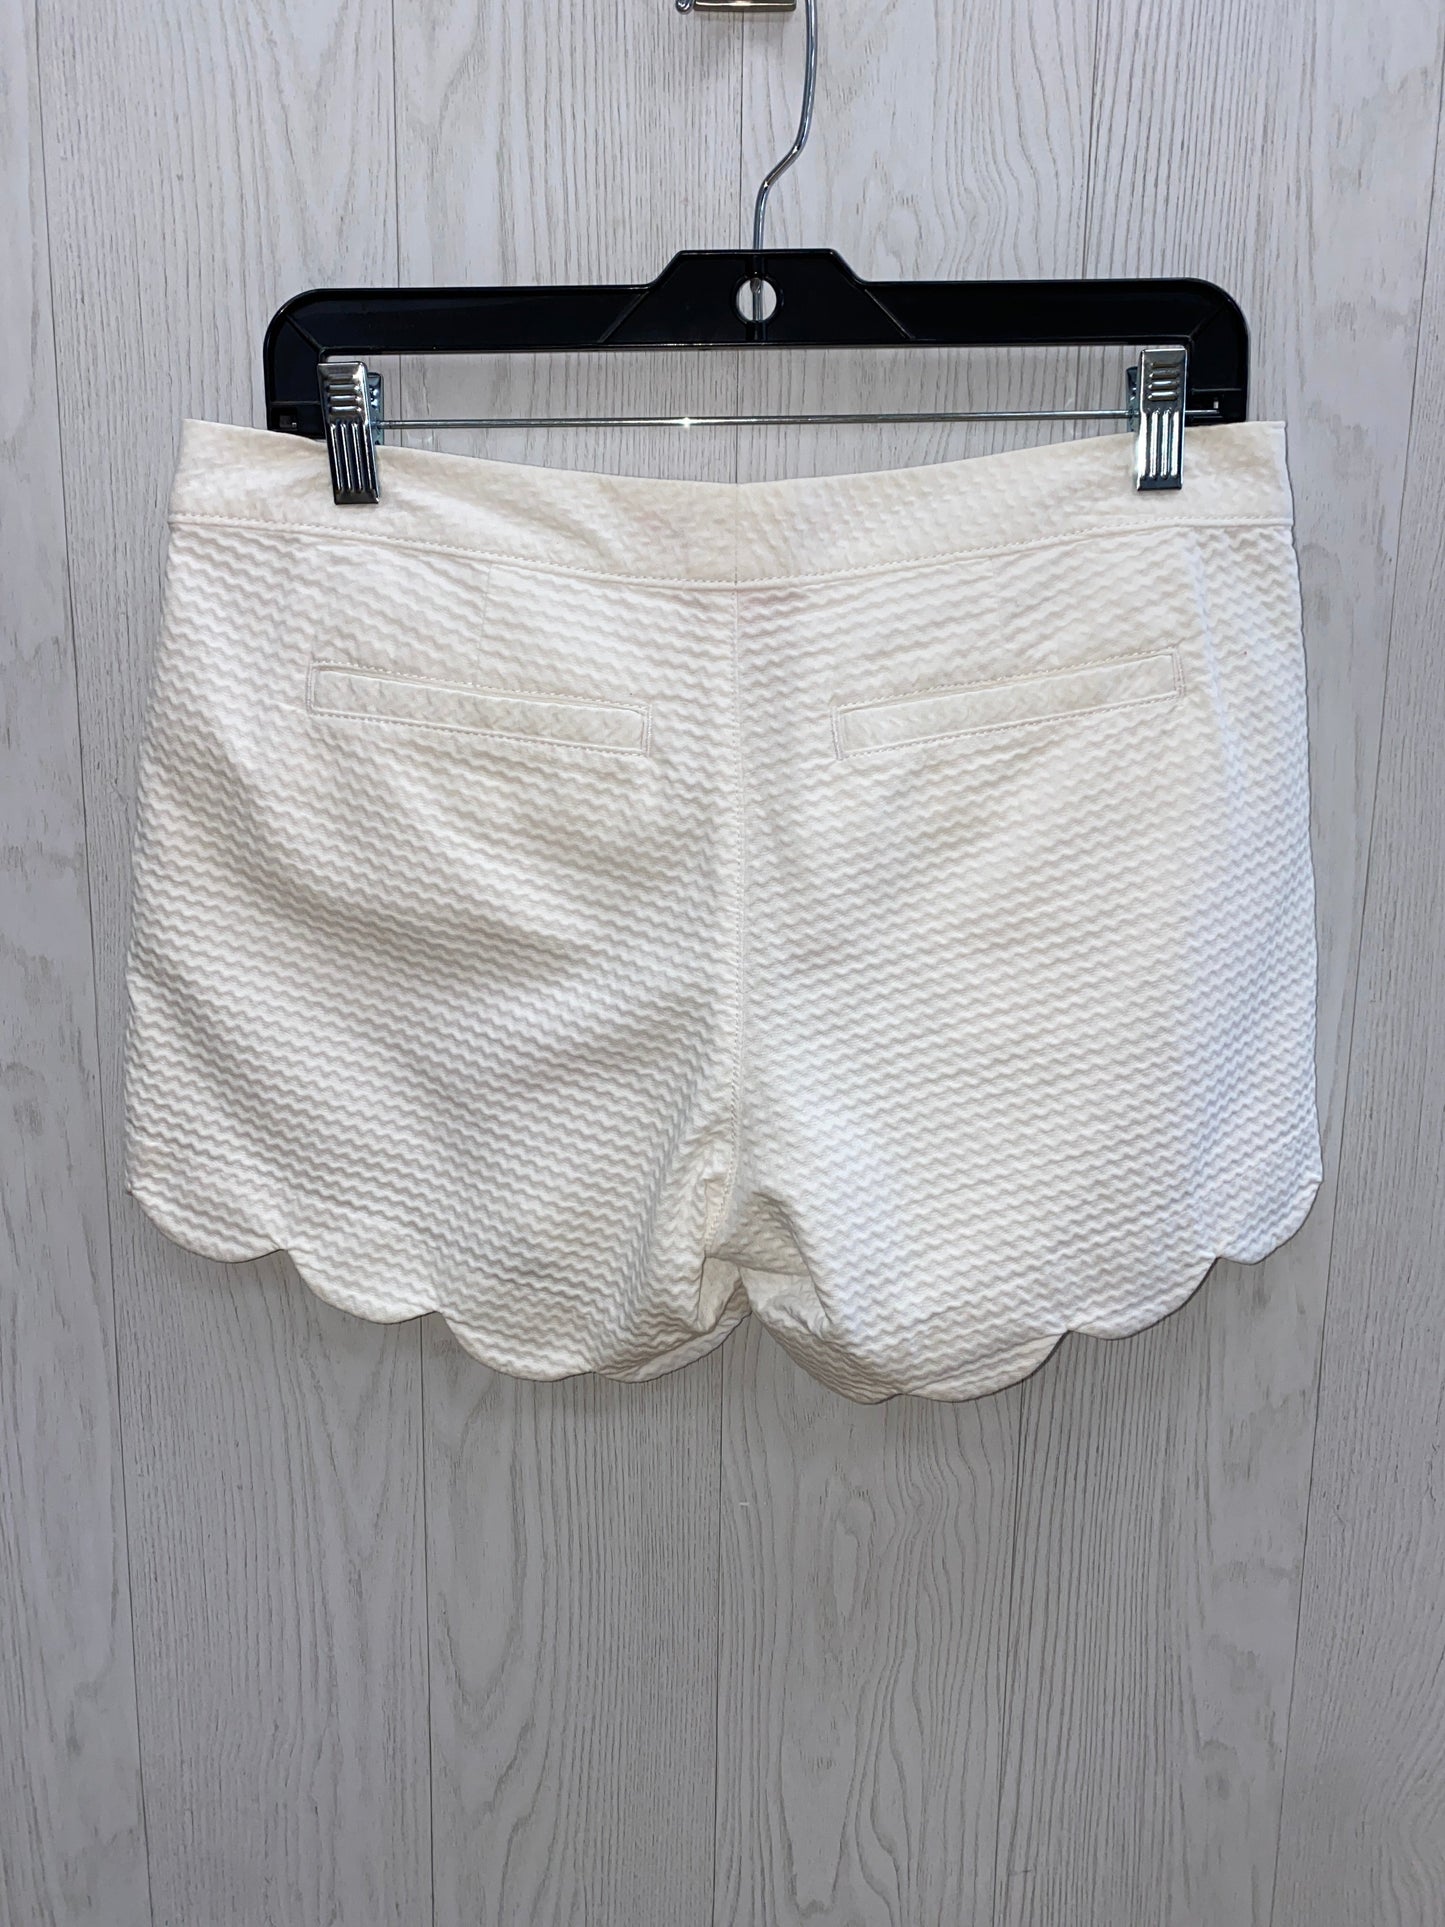 White Shorts Lilly Pulitzer, Size 4